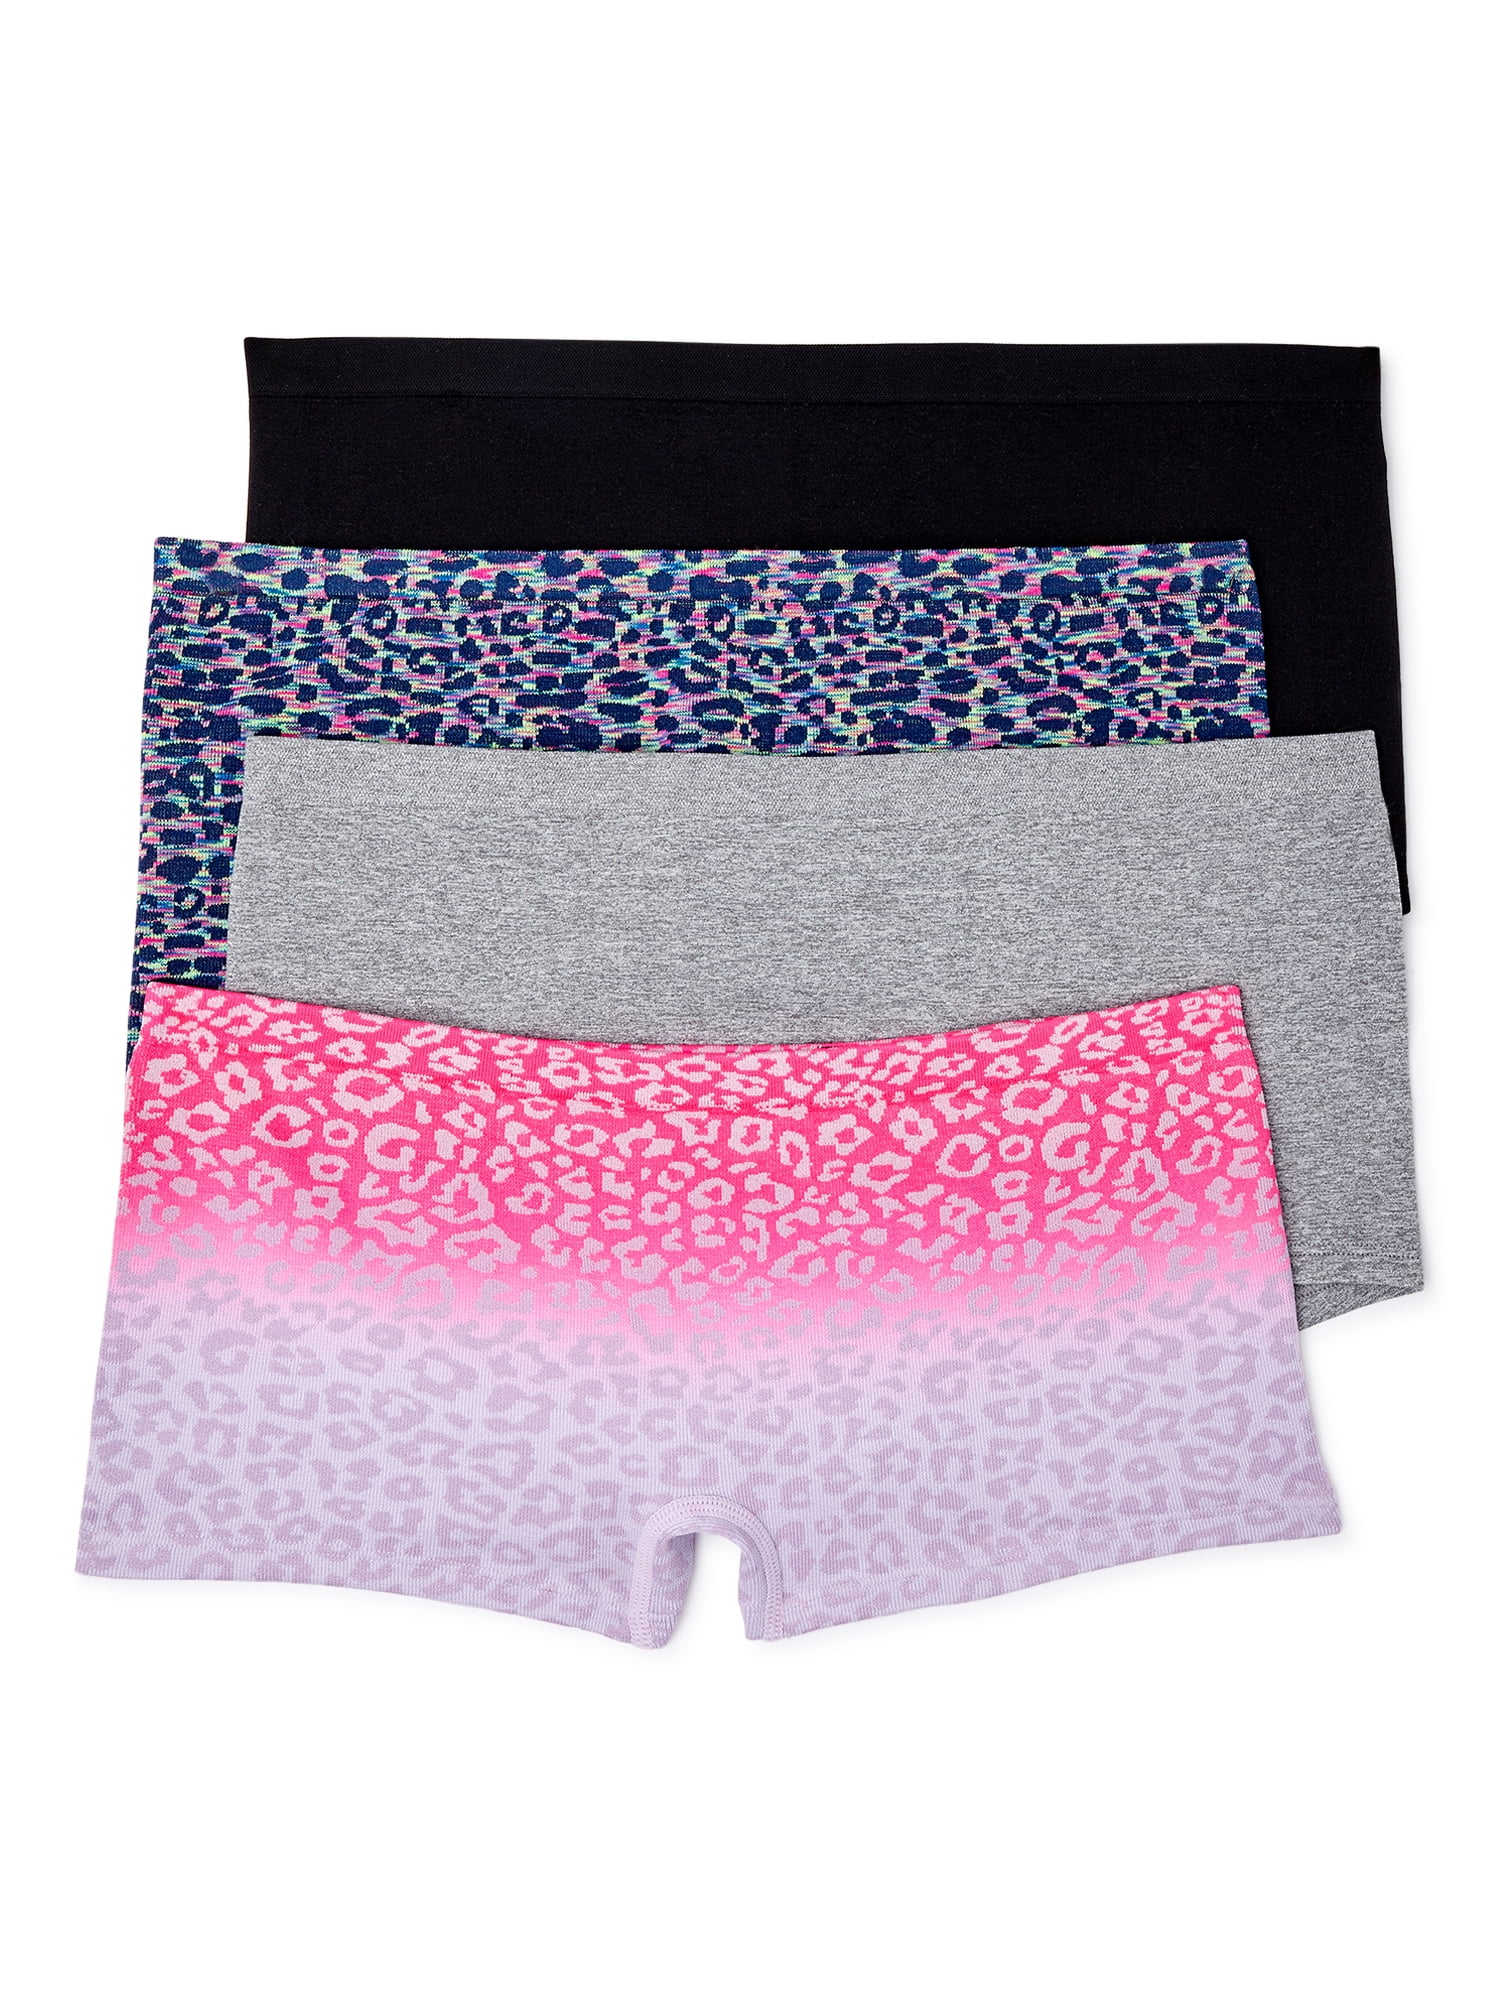 6 BOYSHORTS Seamless FLOWER Printed SOFT PANTIES UNDIES Underwear SPORT One size 